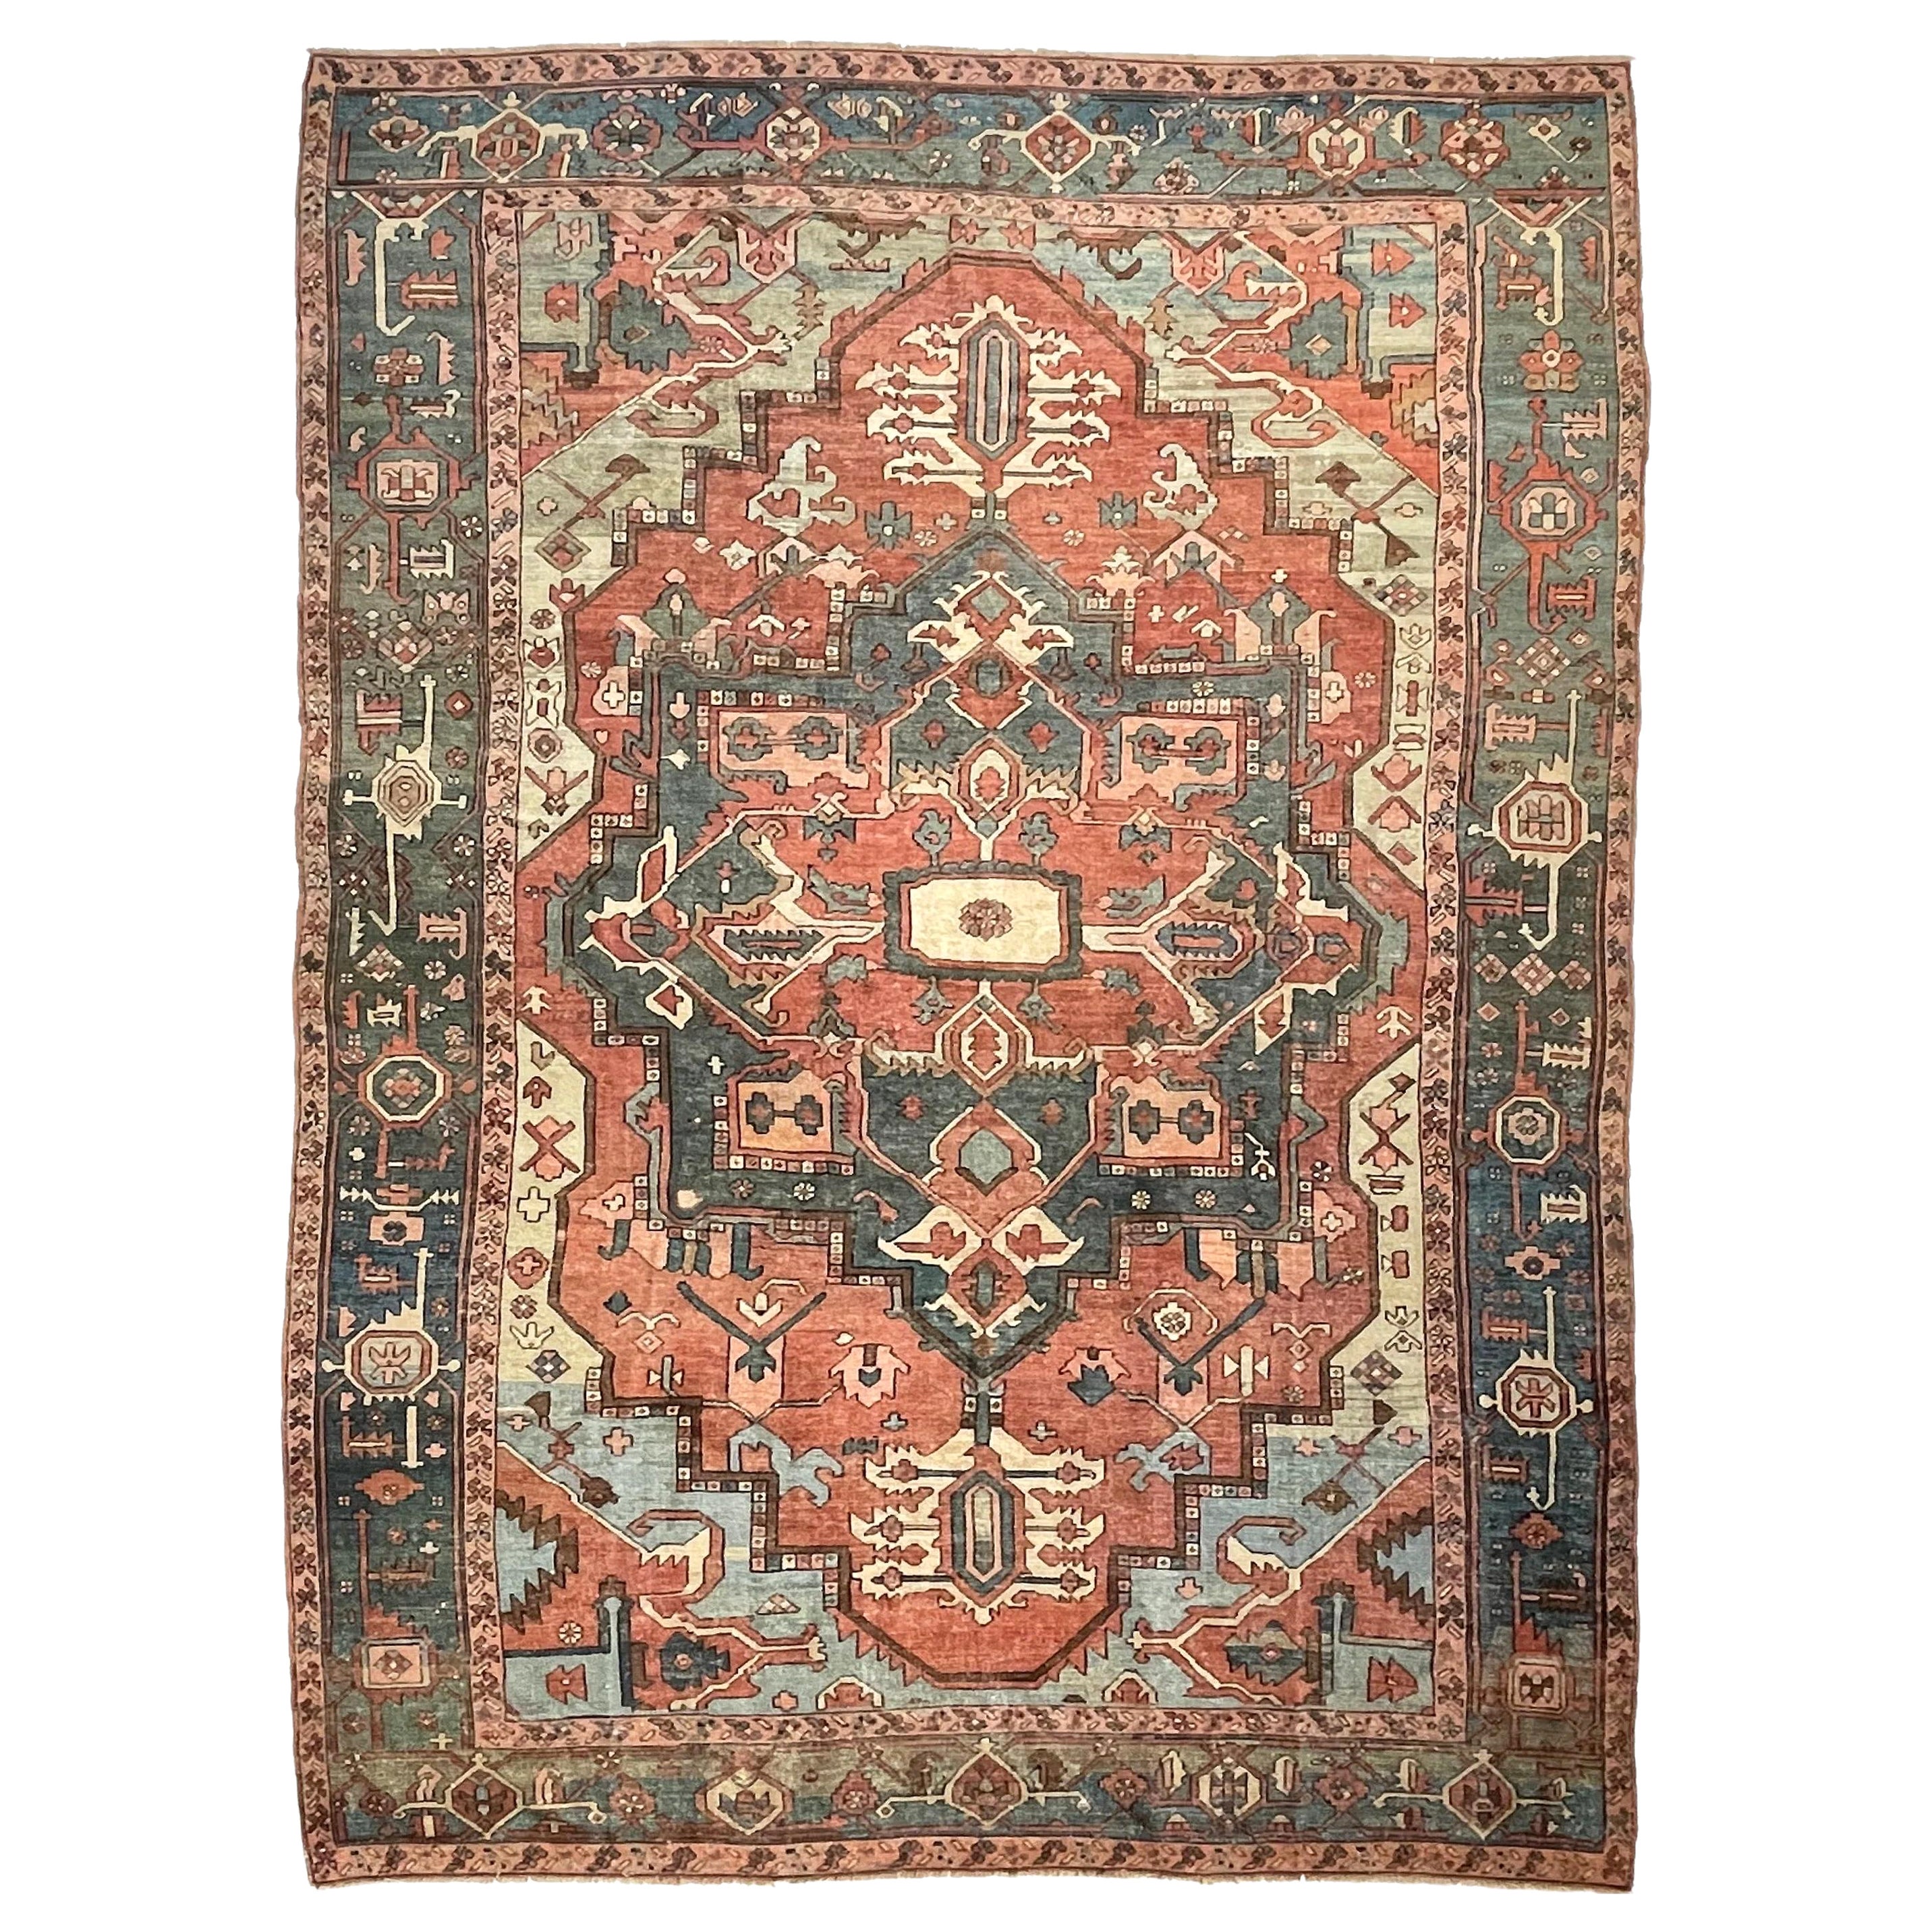 Antique Persian Green And Terracotta Serapi Carpet Rug, circa 1880-1900's